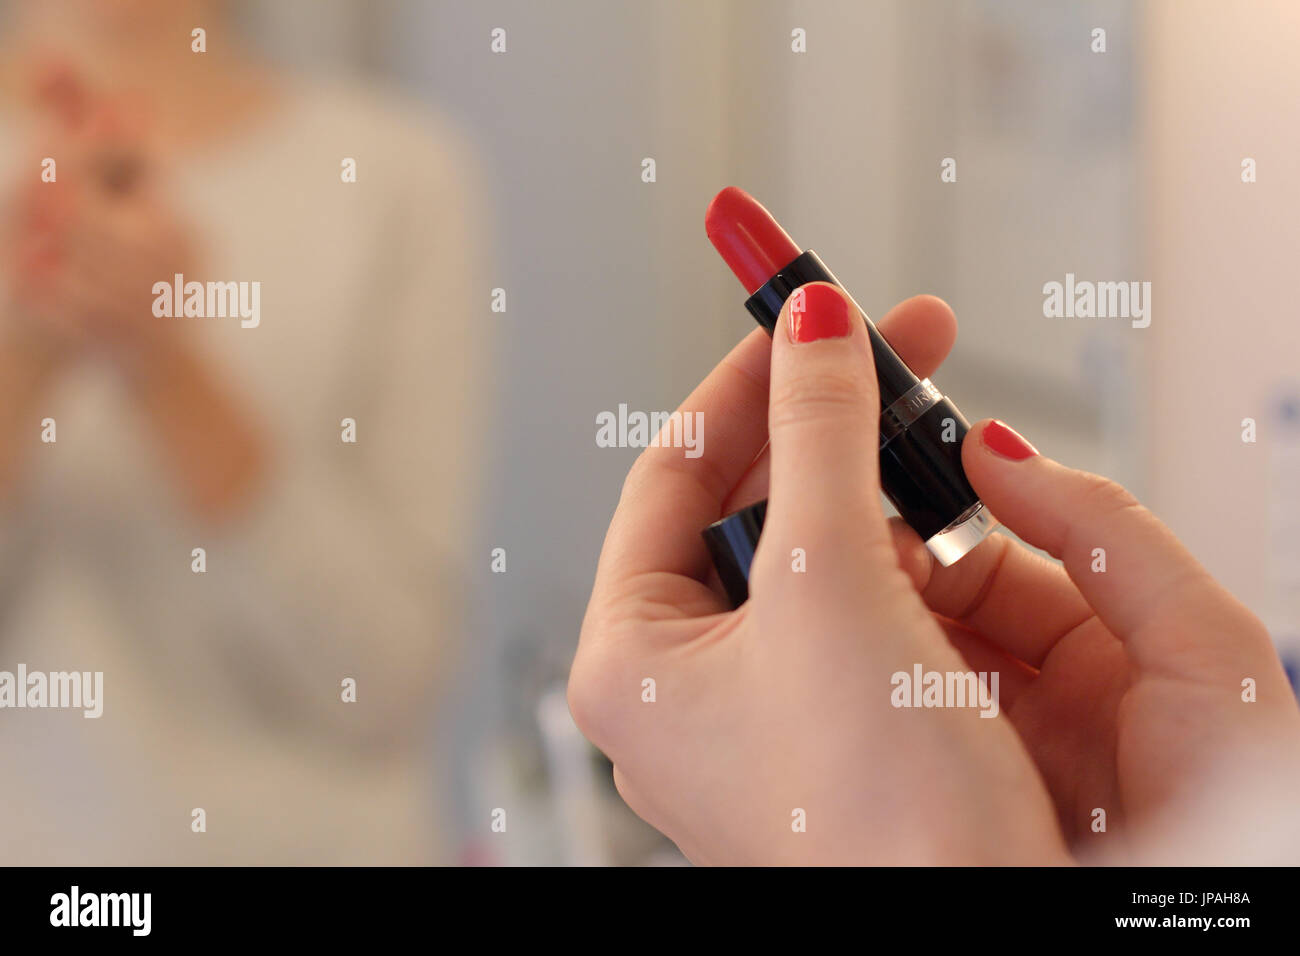 Woman, detail, hands holdin a lipstick, Stock Photo